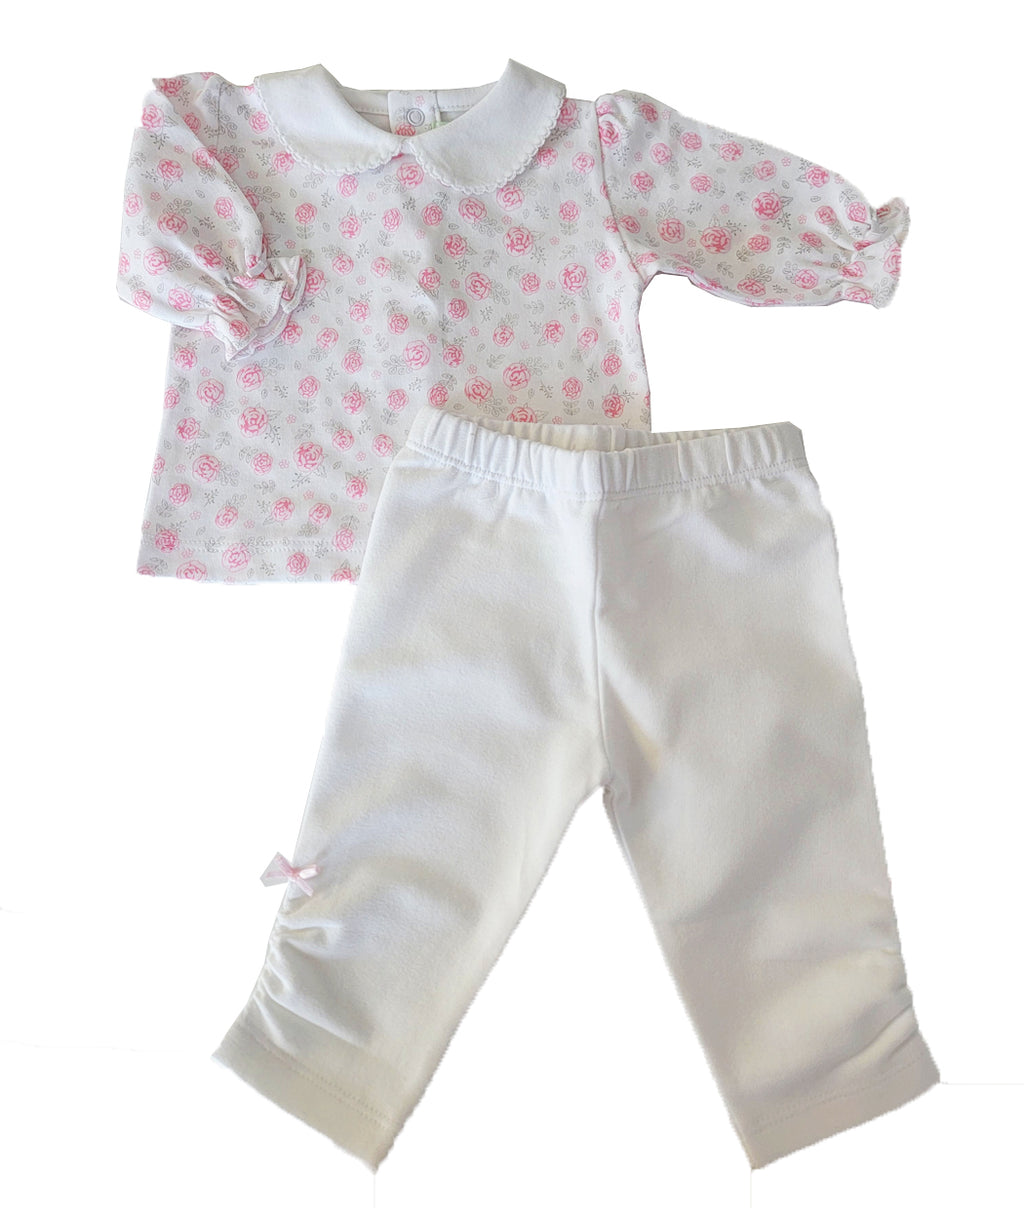 Baby Girl's Pink Velour "Arianne" 3 PC Dress Set - Little Threads Inc. Children's Clothing